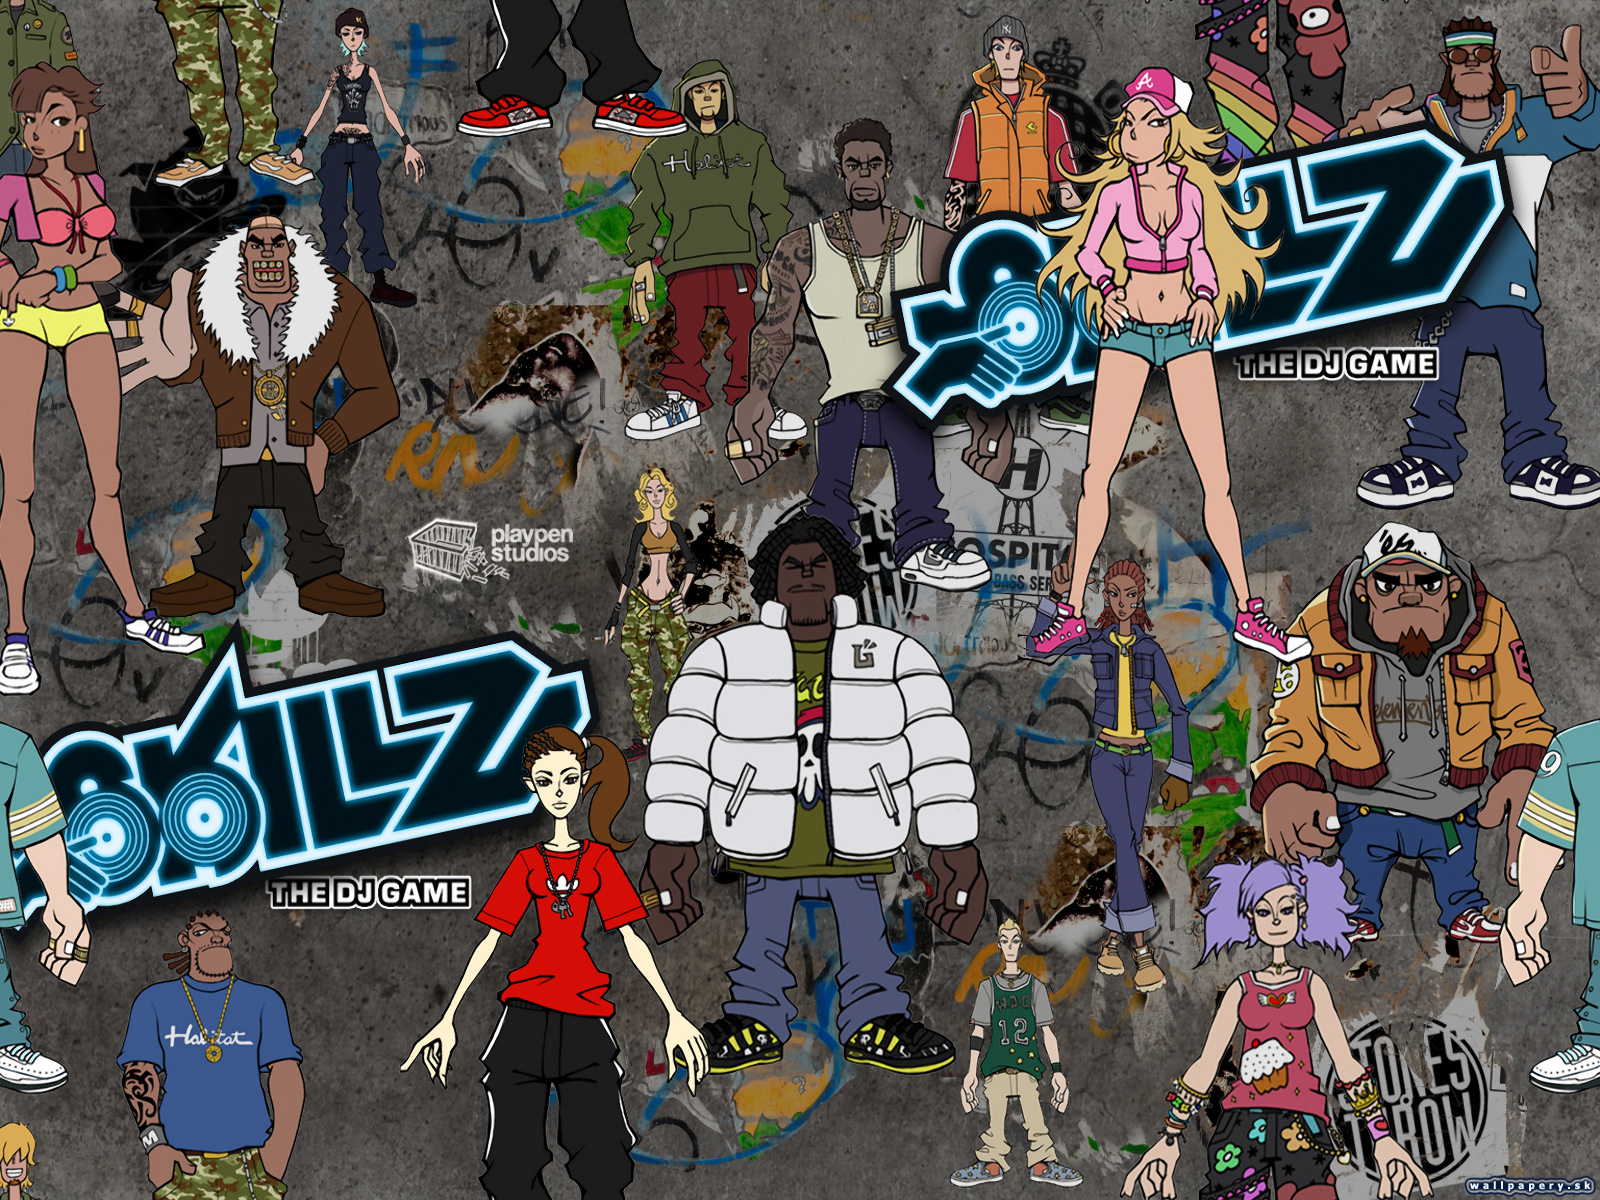 Skillz: The DJ Game - wallpaper 2